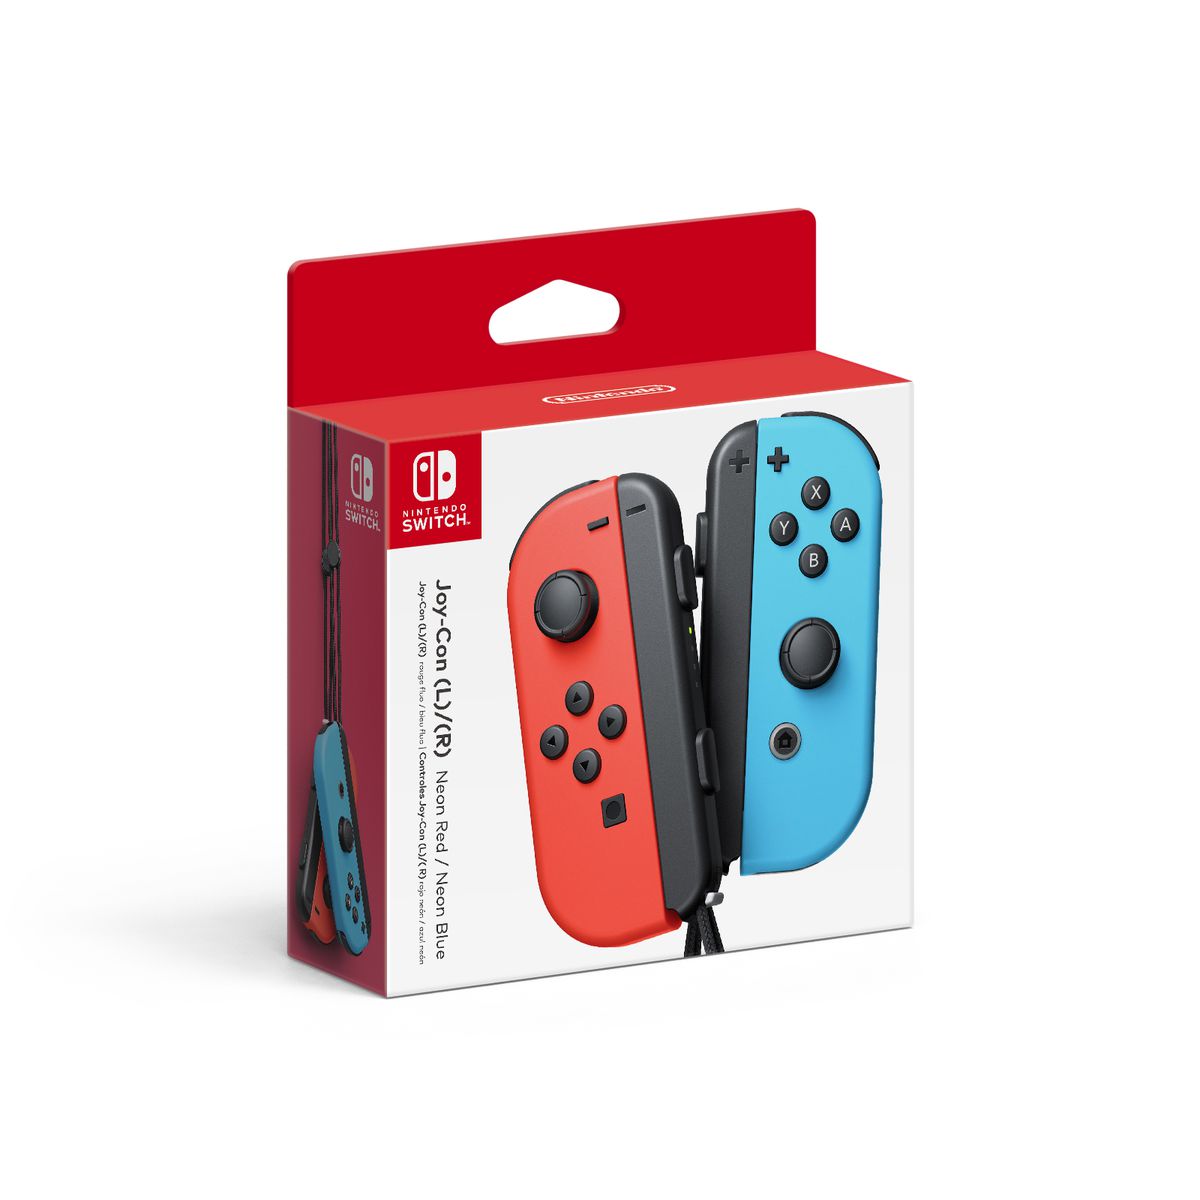 Nintendo Switch extra Joy-Con pair